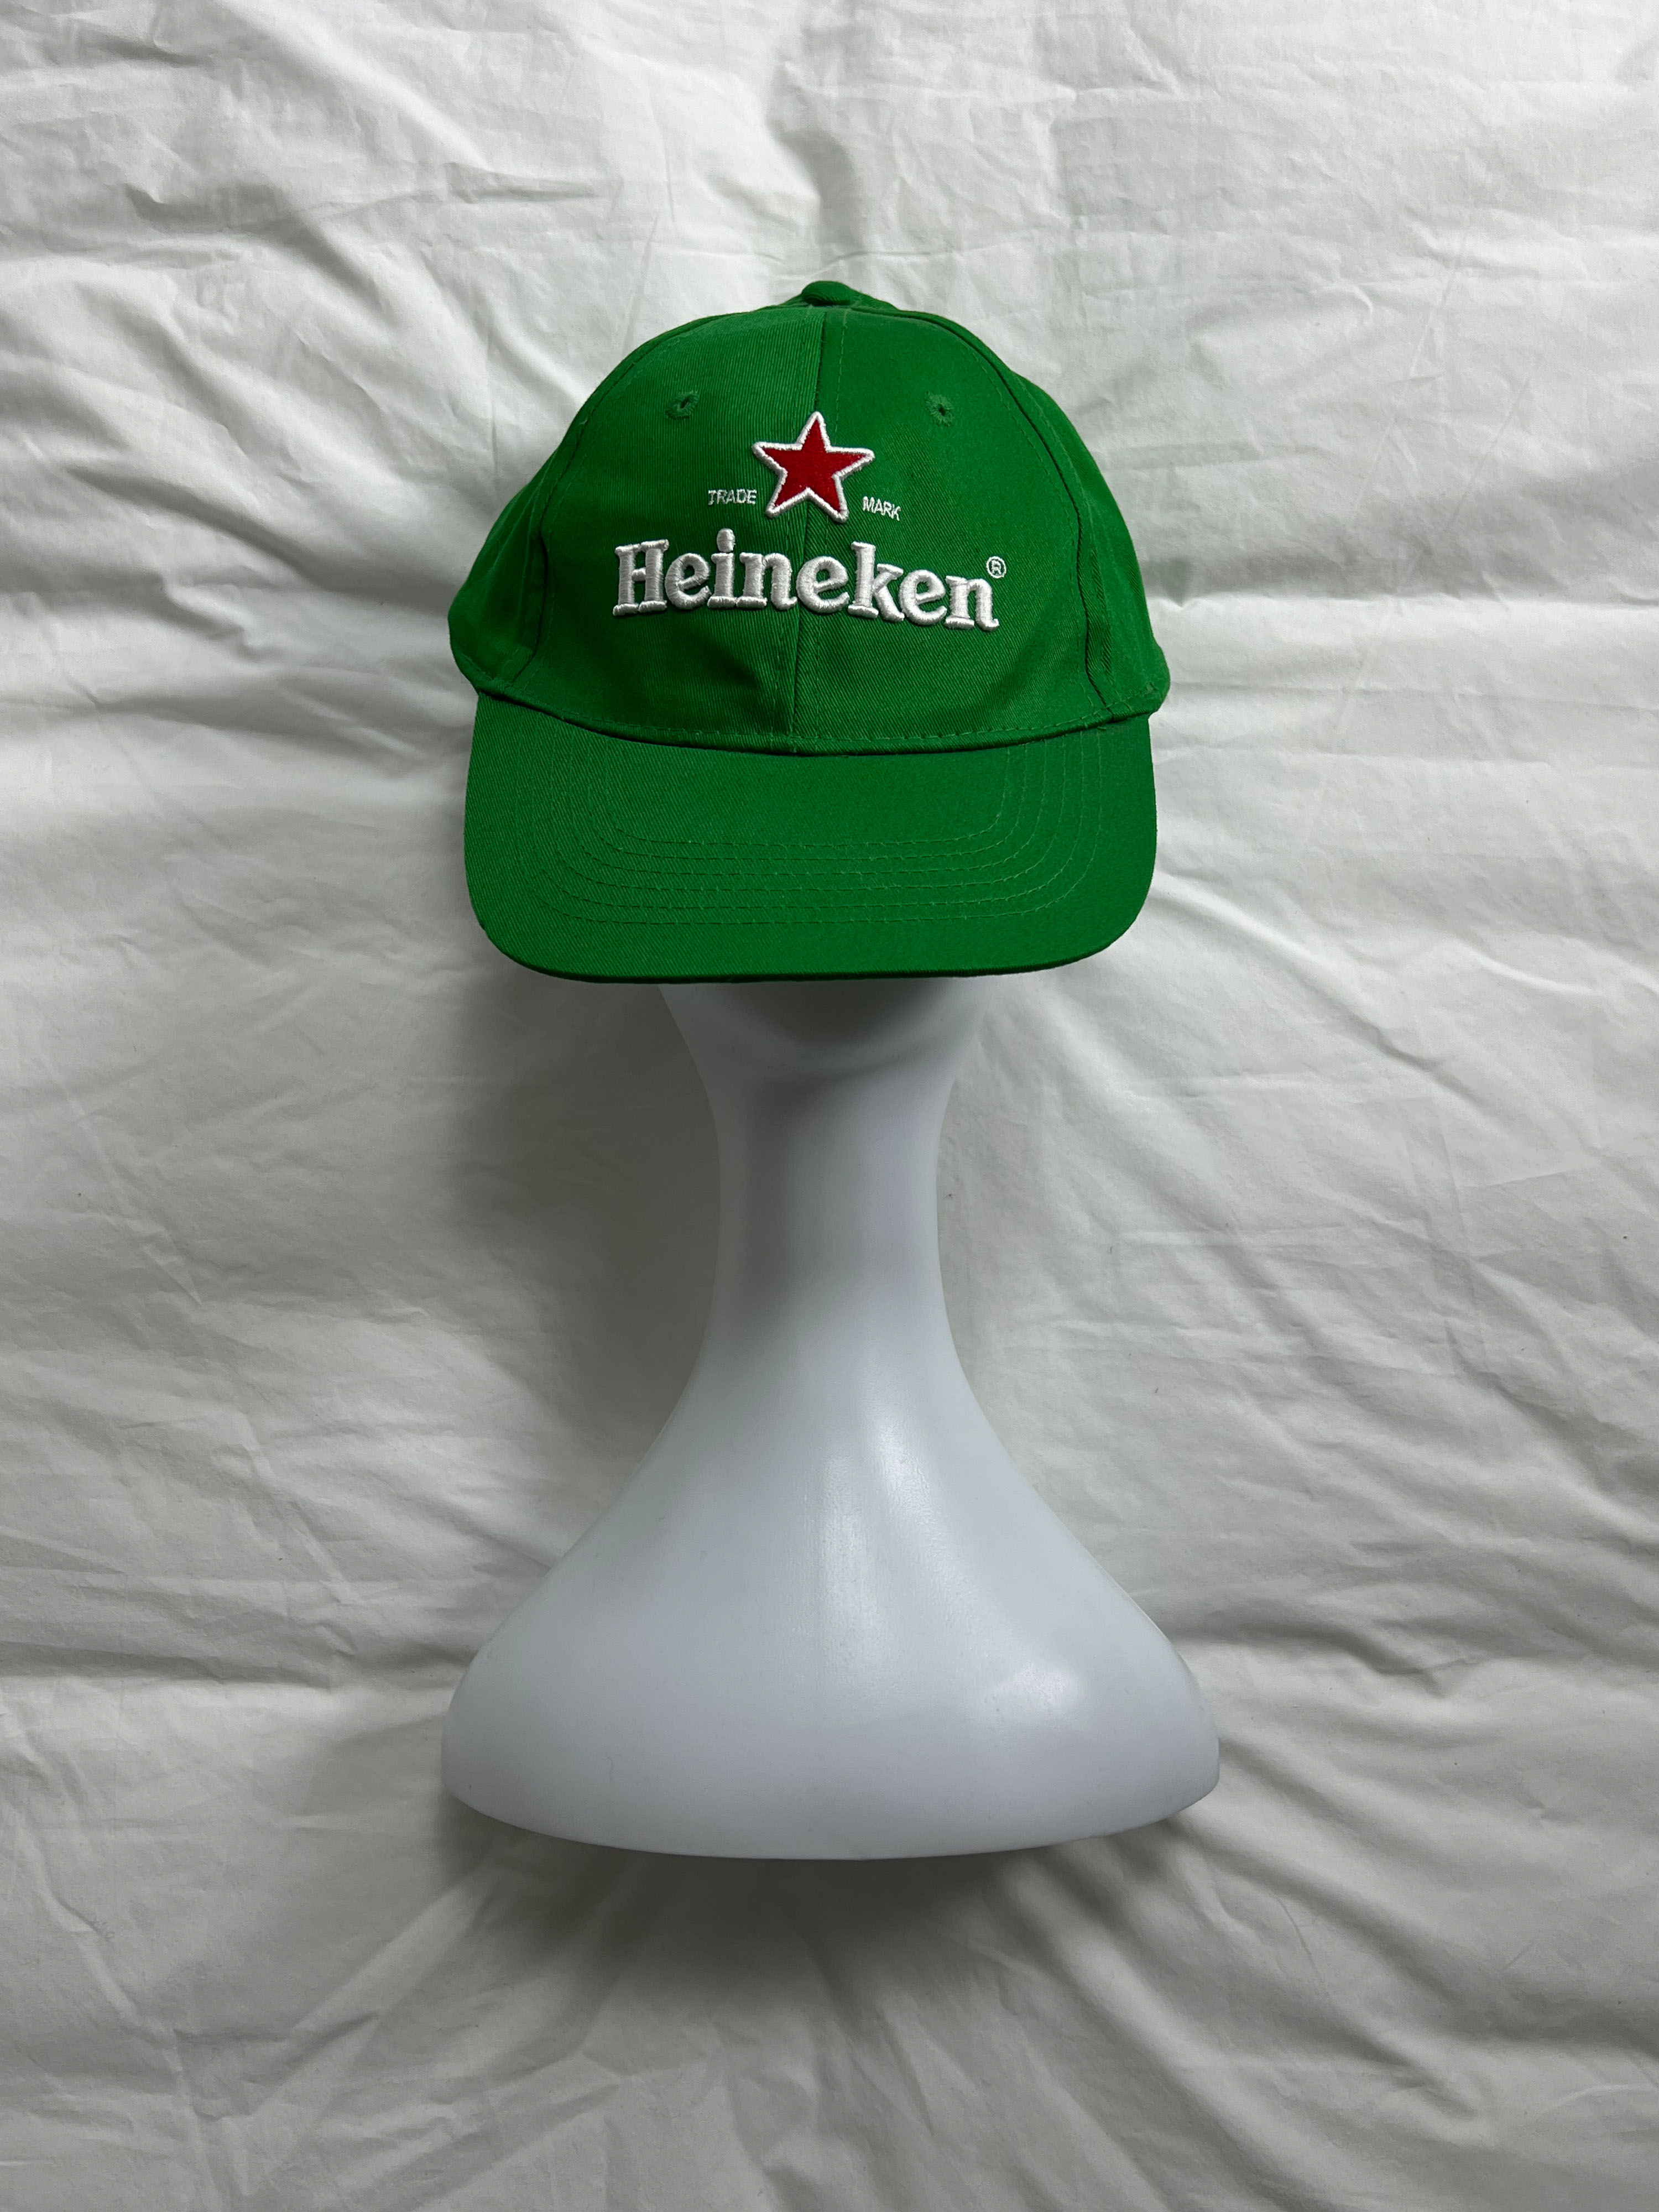 vintage Heineken ball cap